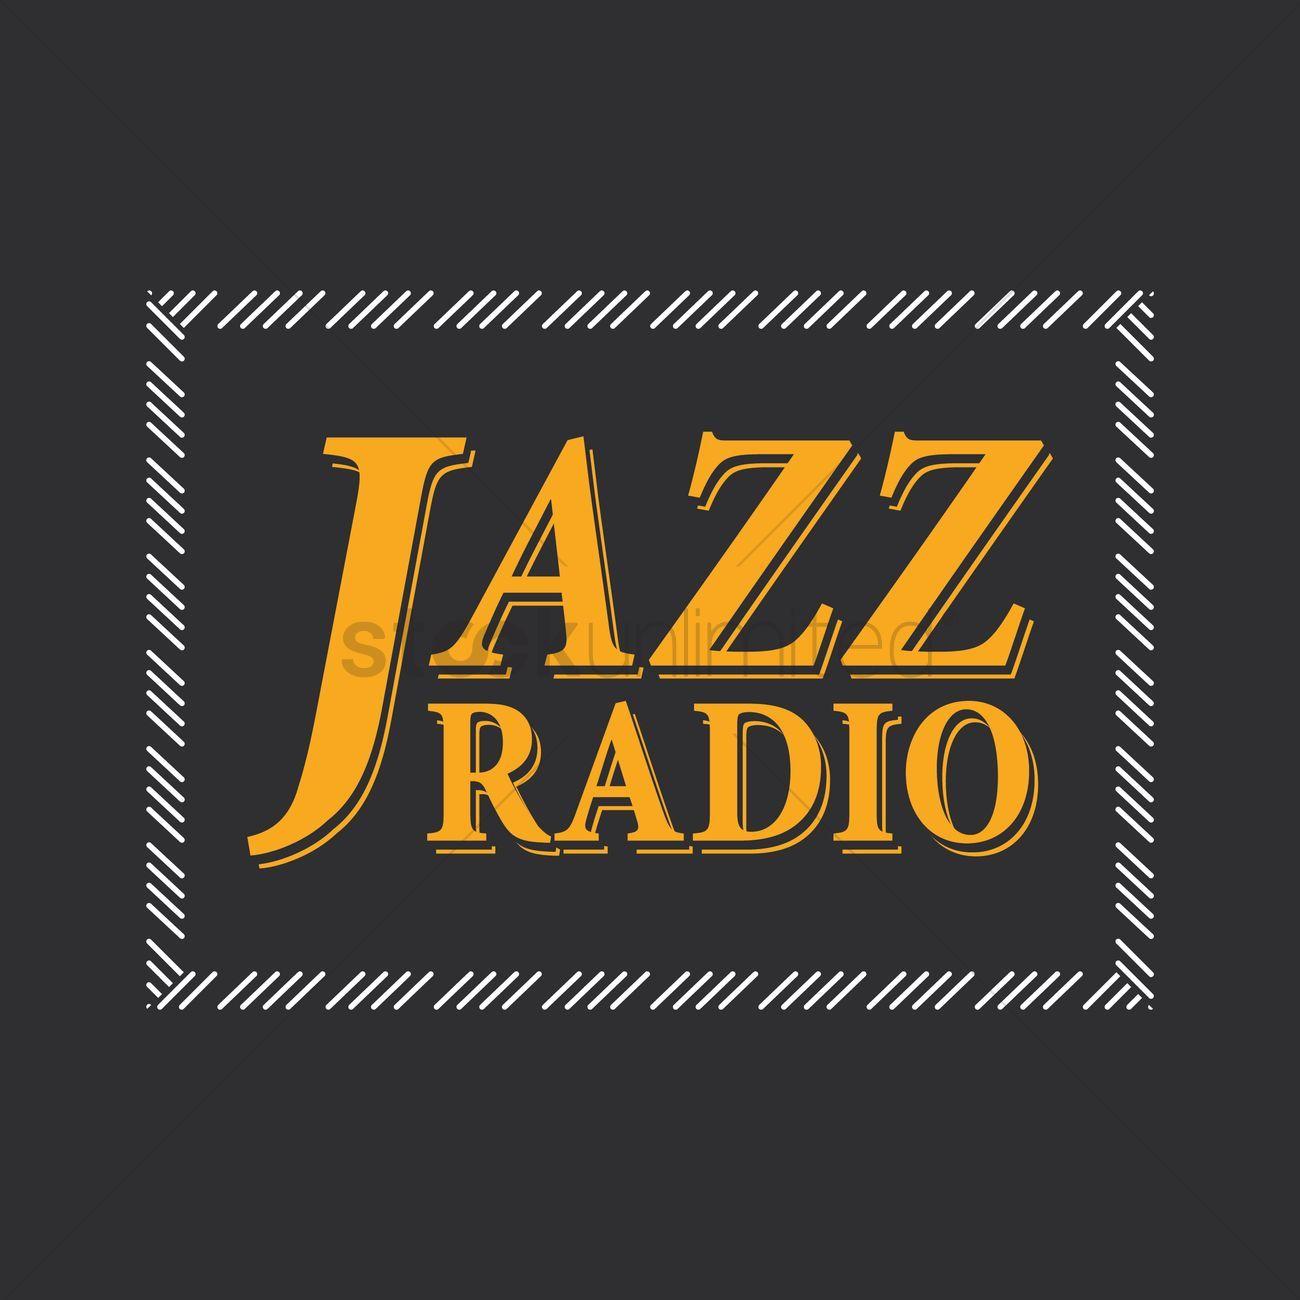 Jazz Radio Logo - Jazz radio logo Vector Image - 1809526 | StockUnlimited